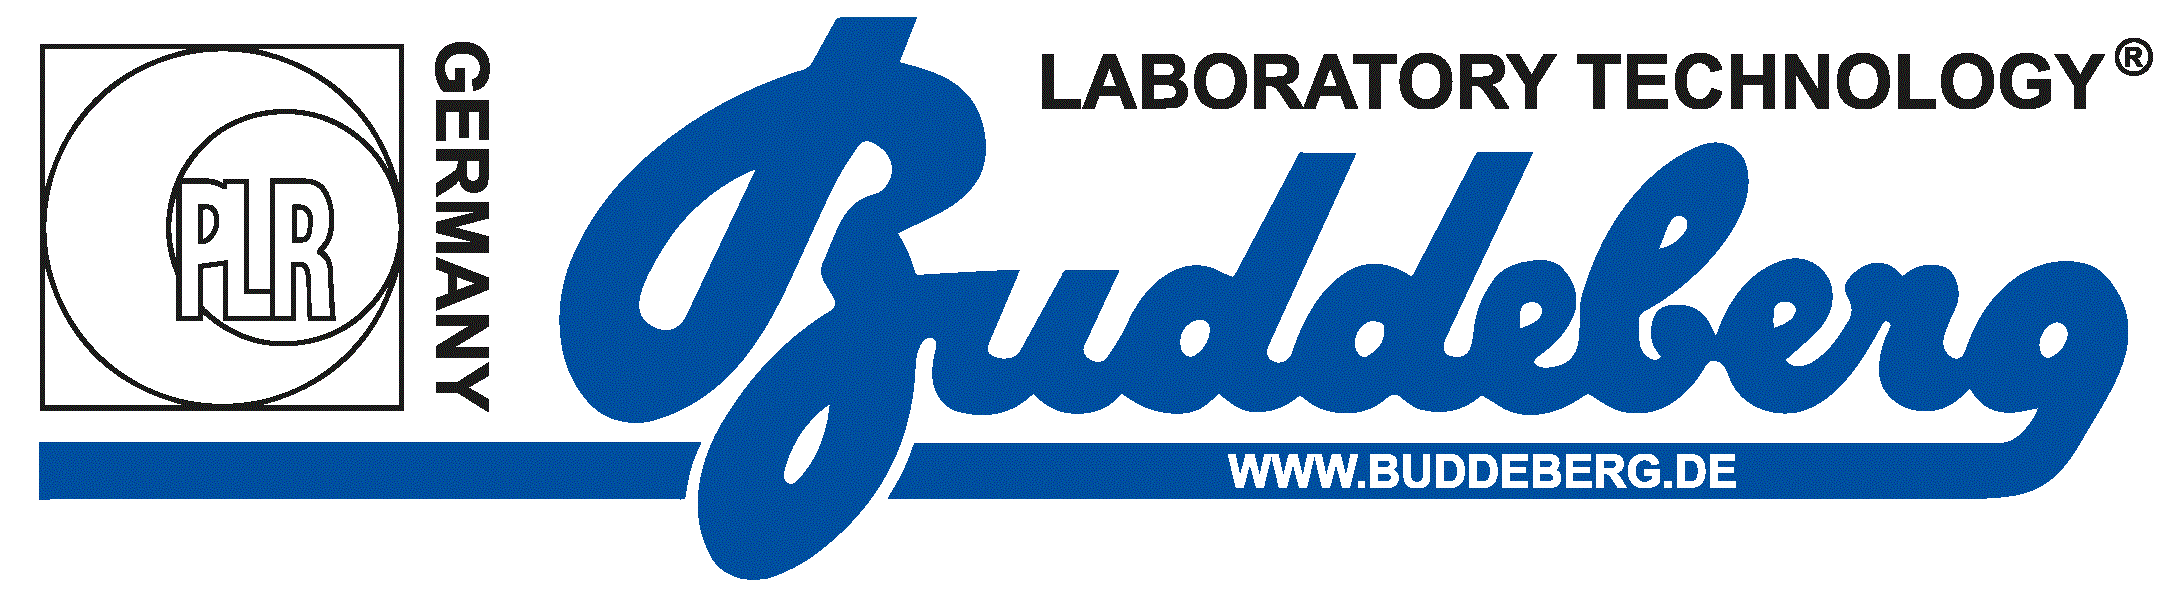 Buddeberg GmbH